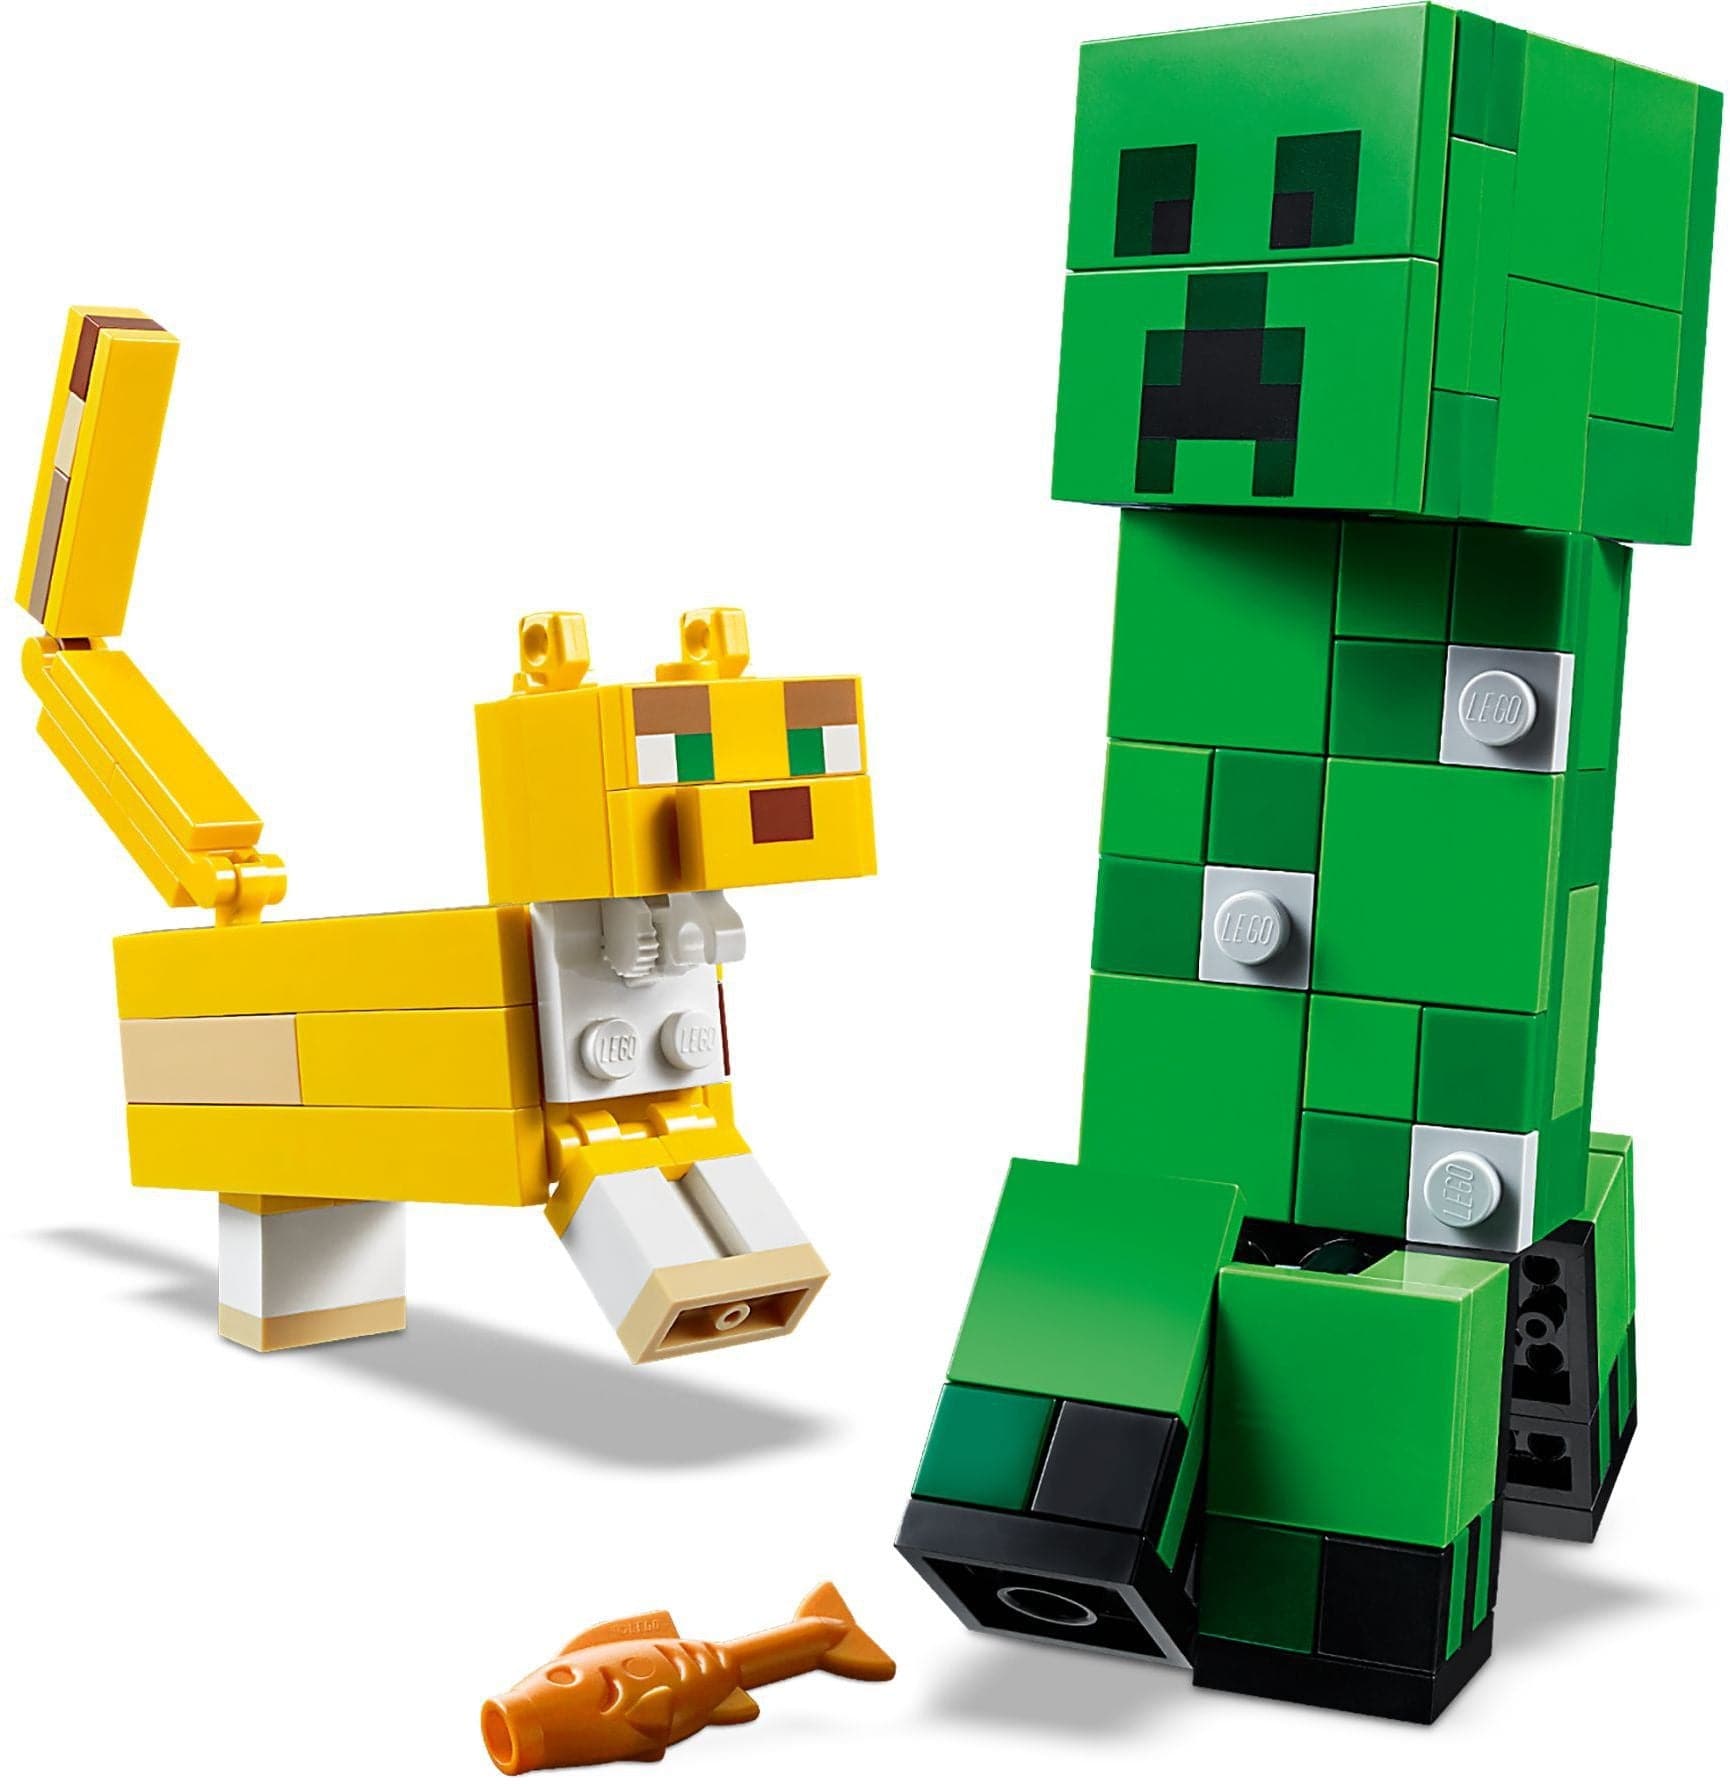 LEGO Minecraft - Large Creeper Figure And Ocelot (21156)